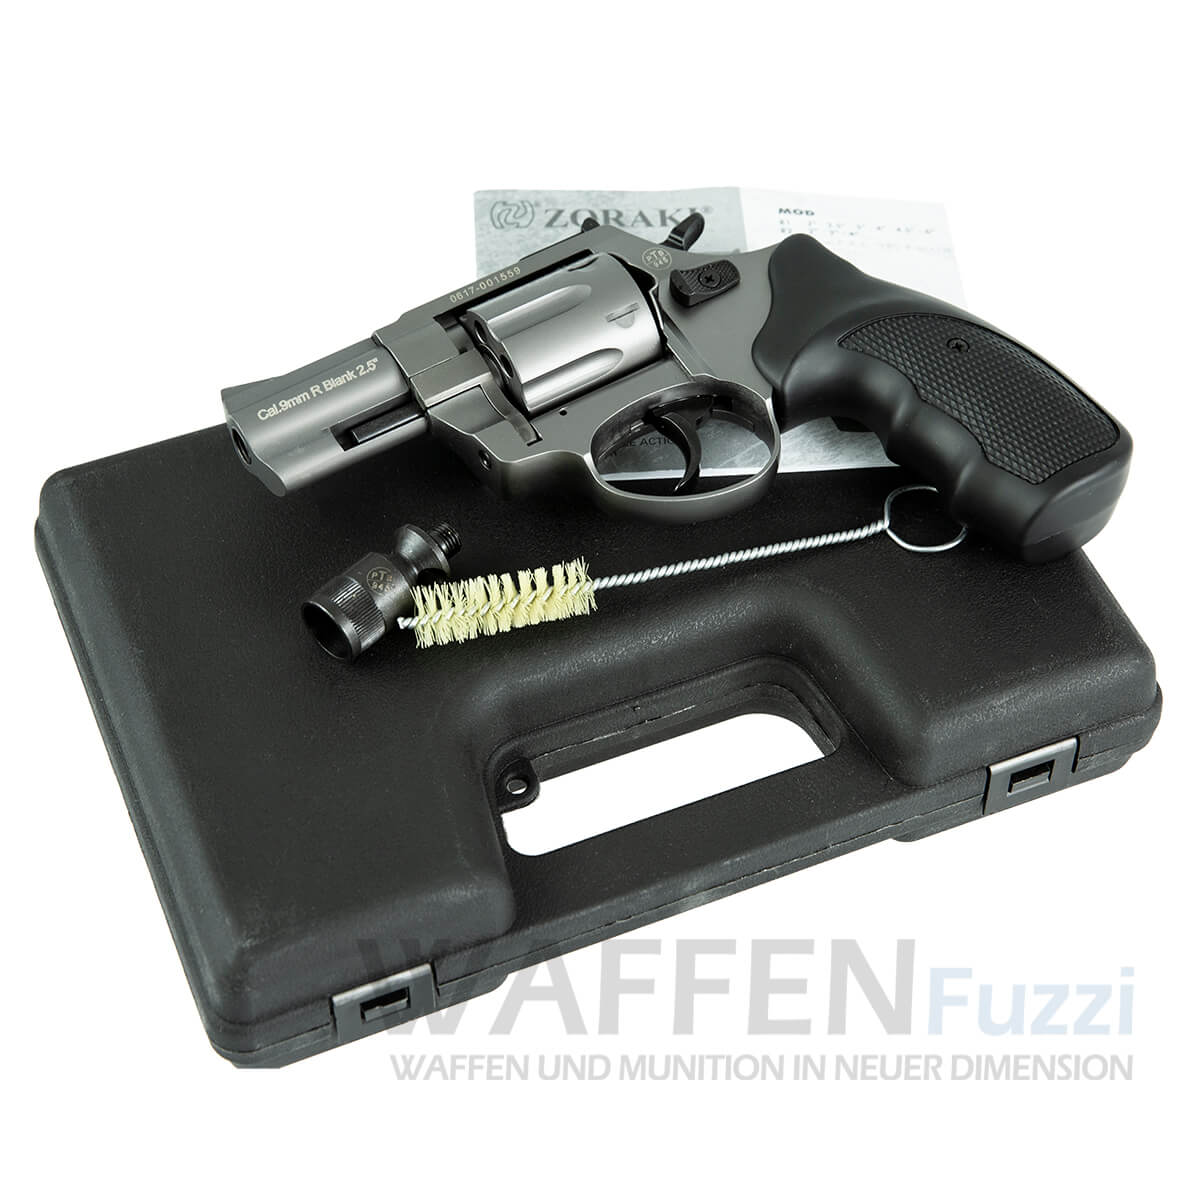 Lieferumfang des Zoraki Revolvers bei Waffenfuzzi Kaliber 9mm R.Knall